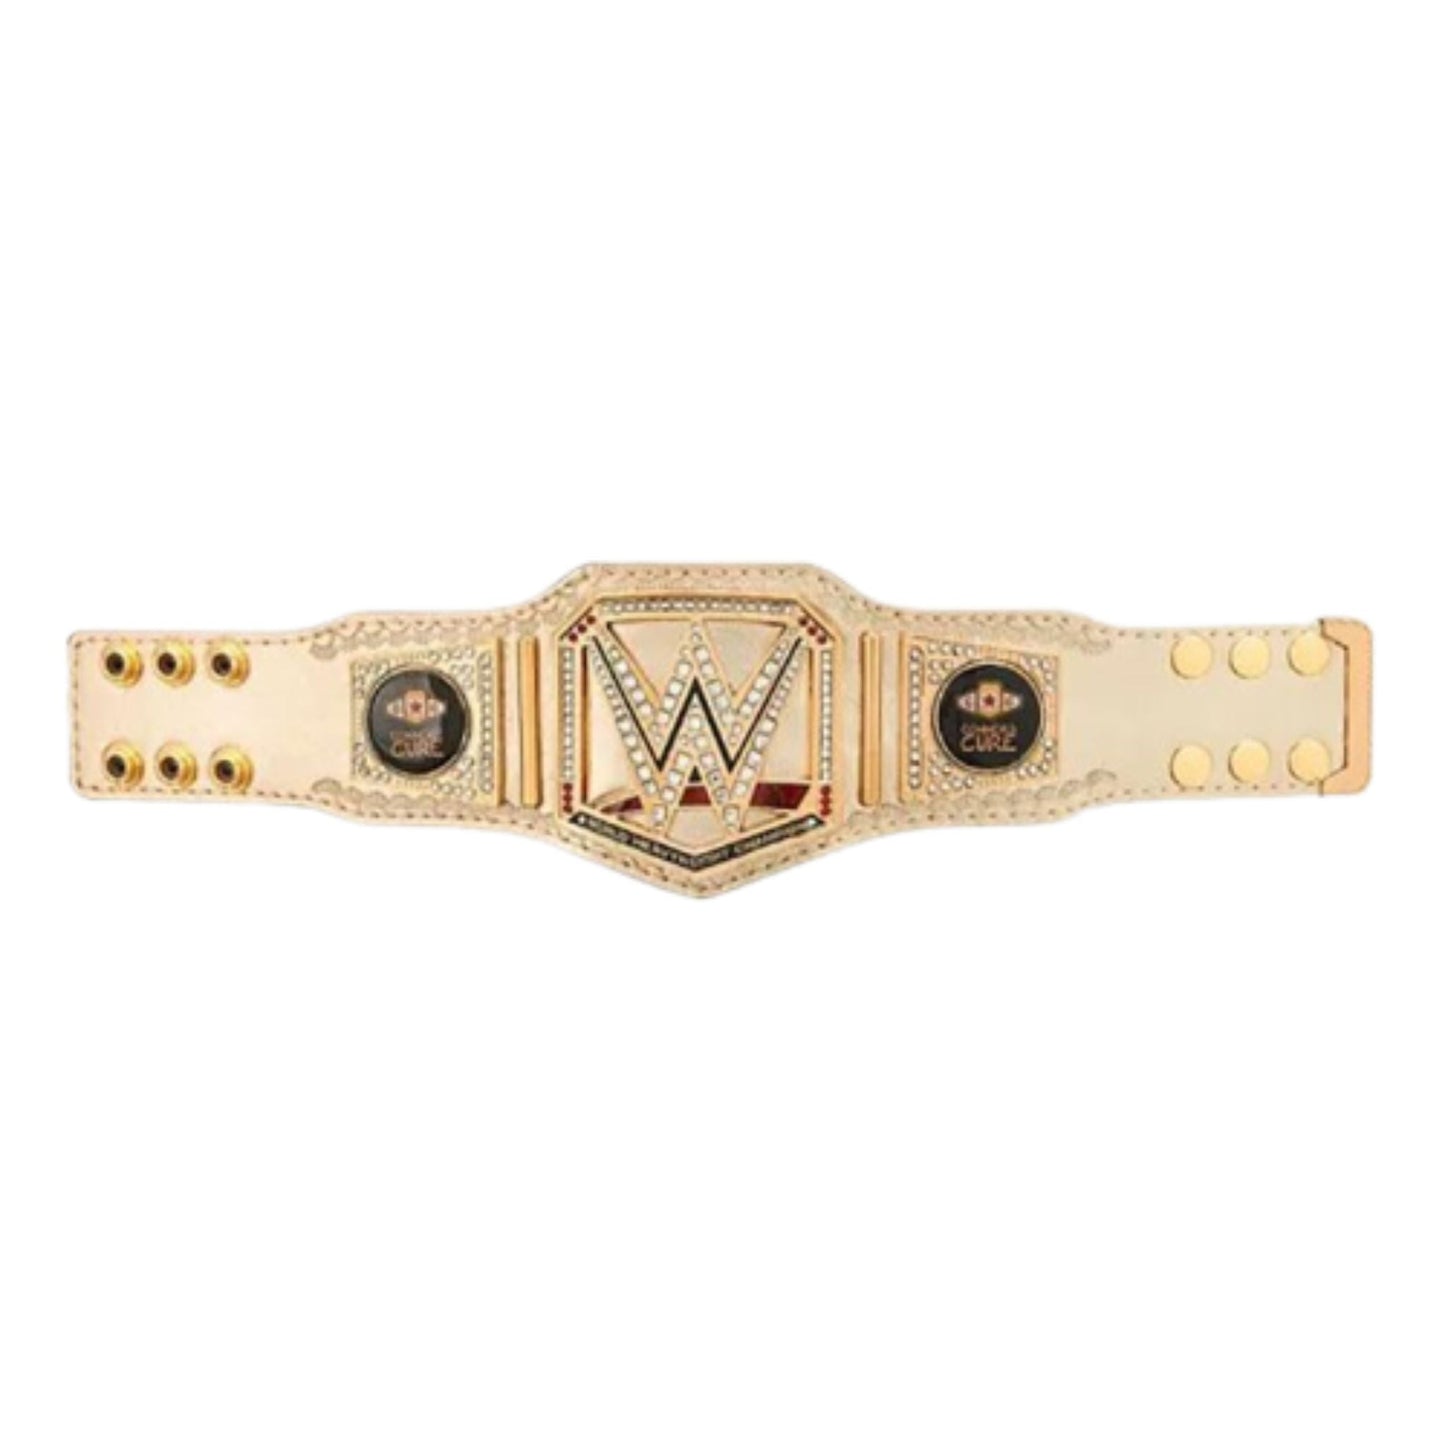 Connor’s cure wwe championship kids replica title belt